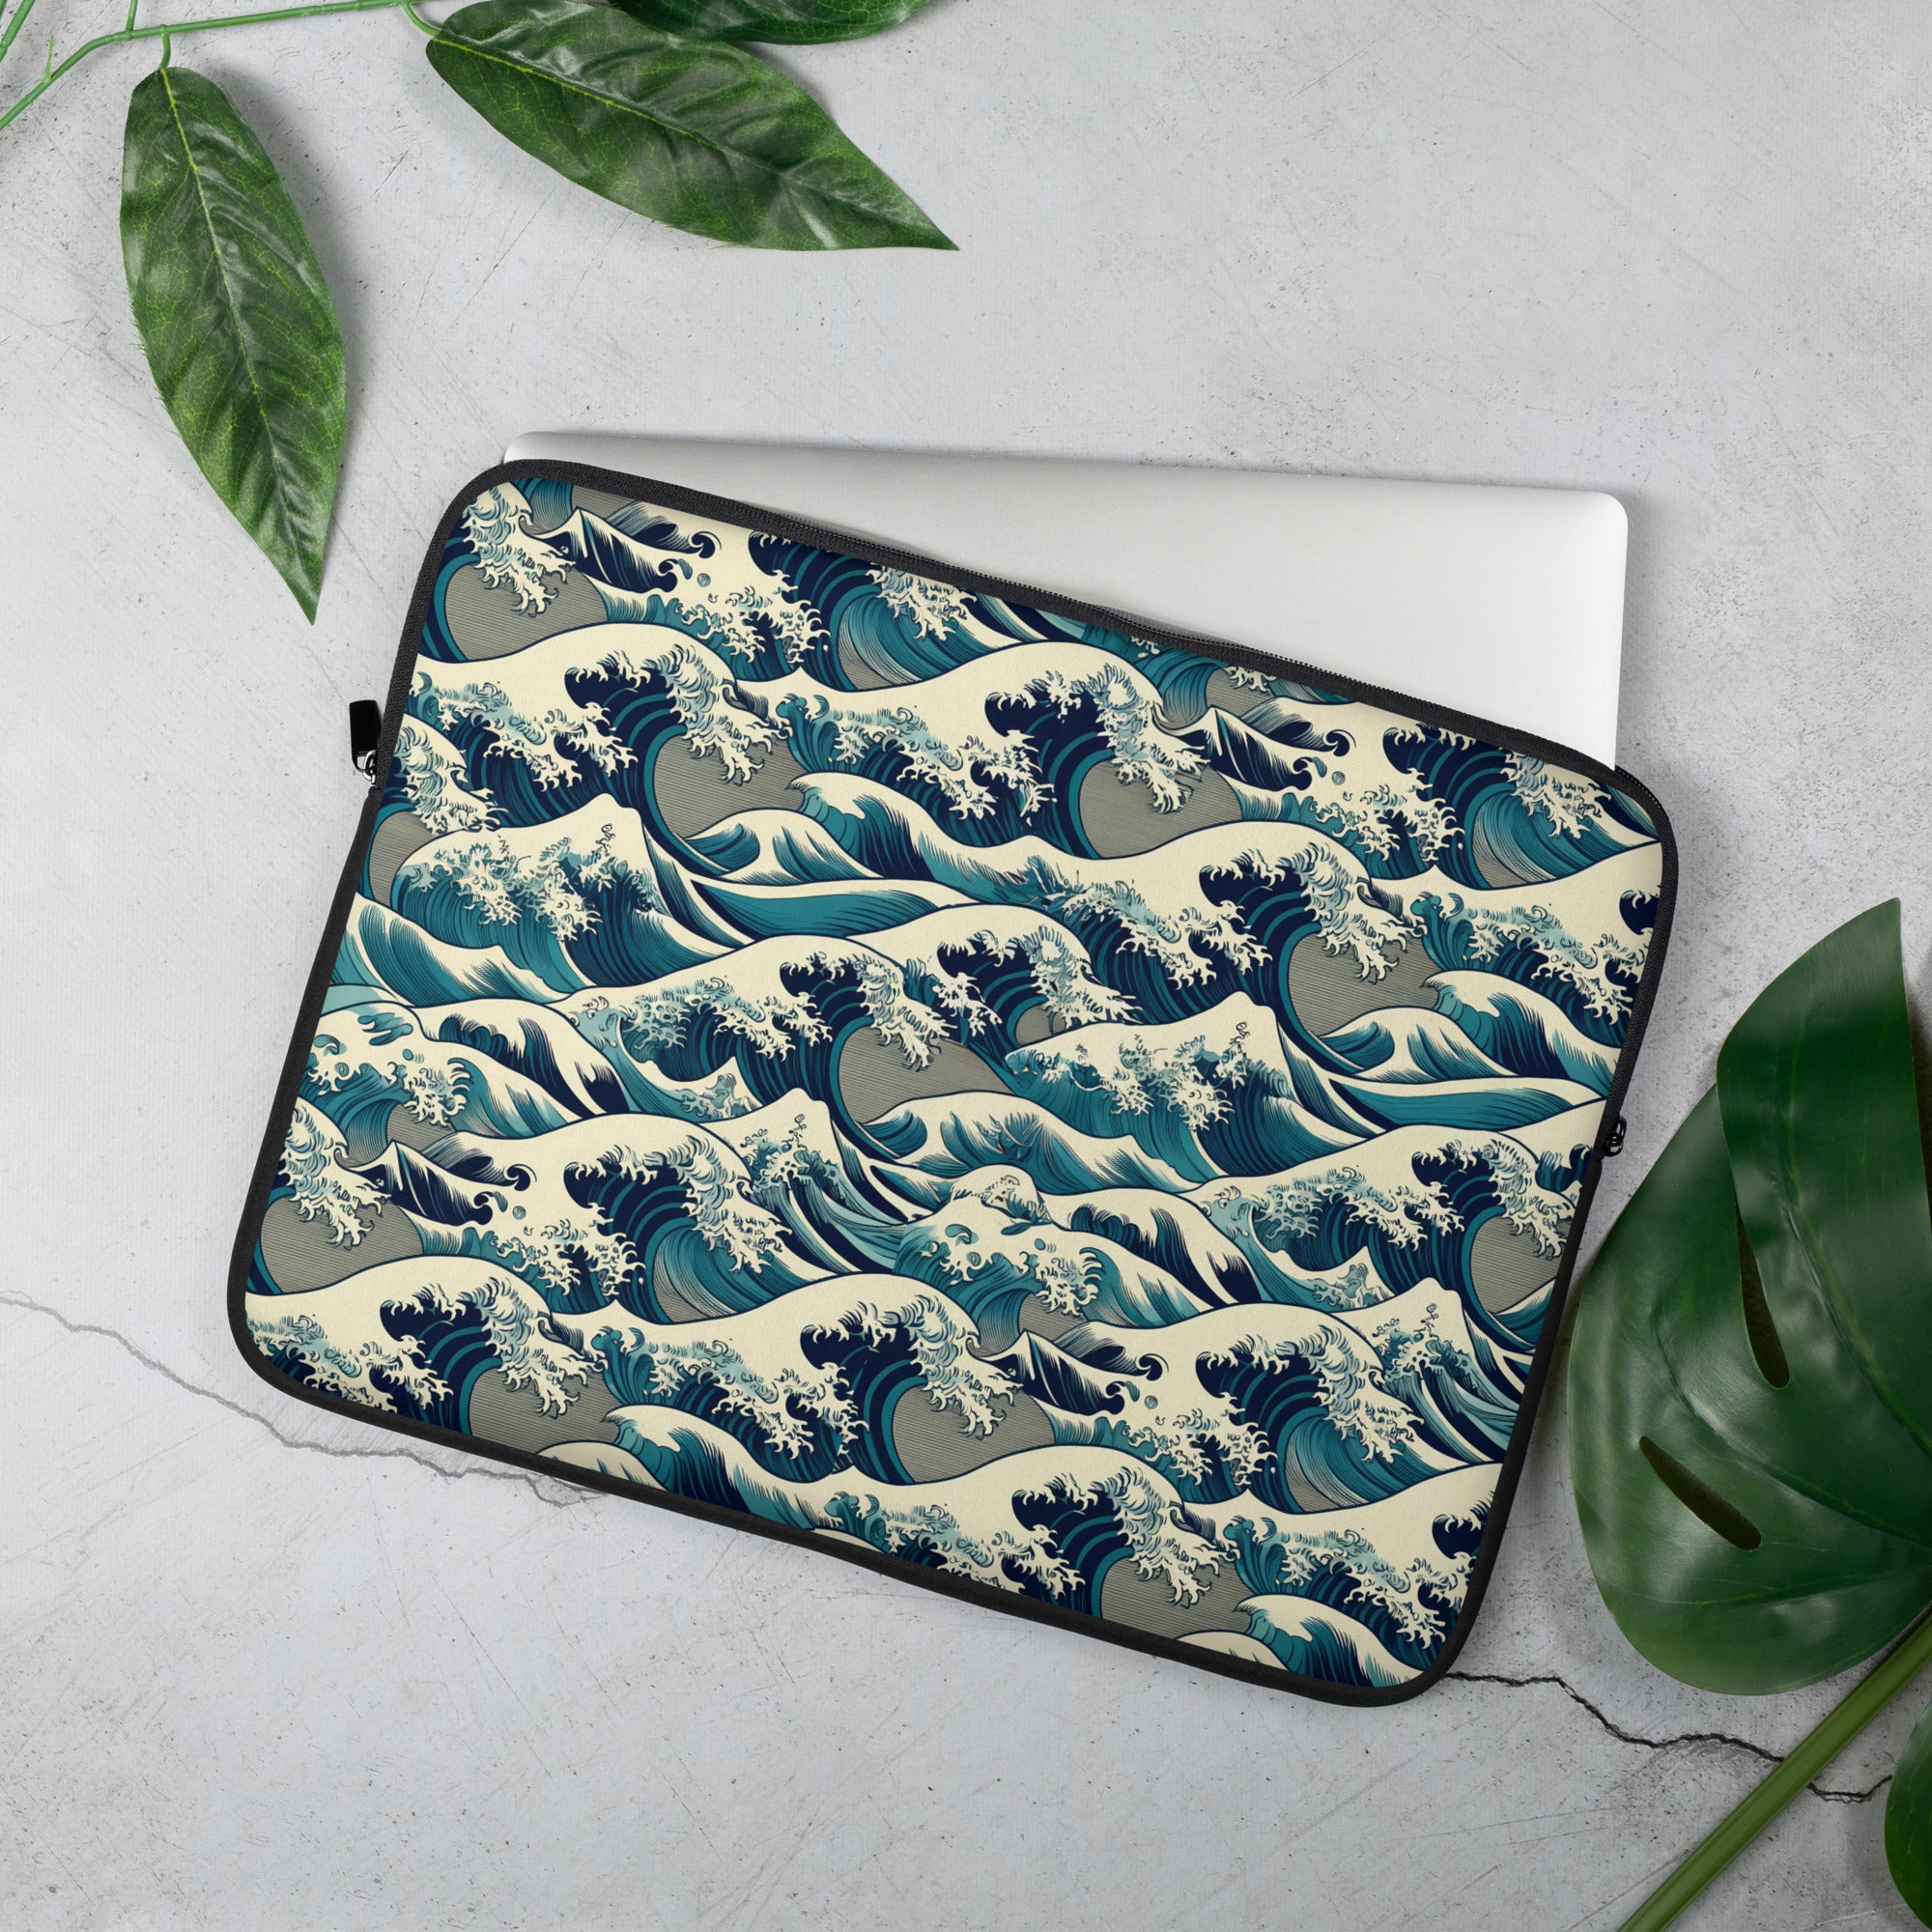 Hokusai 'The Great Wave off Kanagawa' Famous Painting Laptop Sleeve | Premium Art Laptop Sleeve